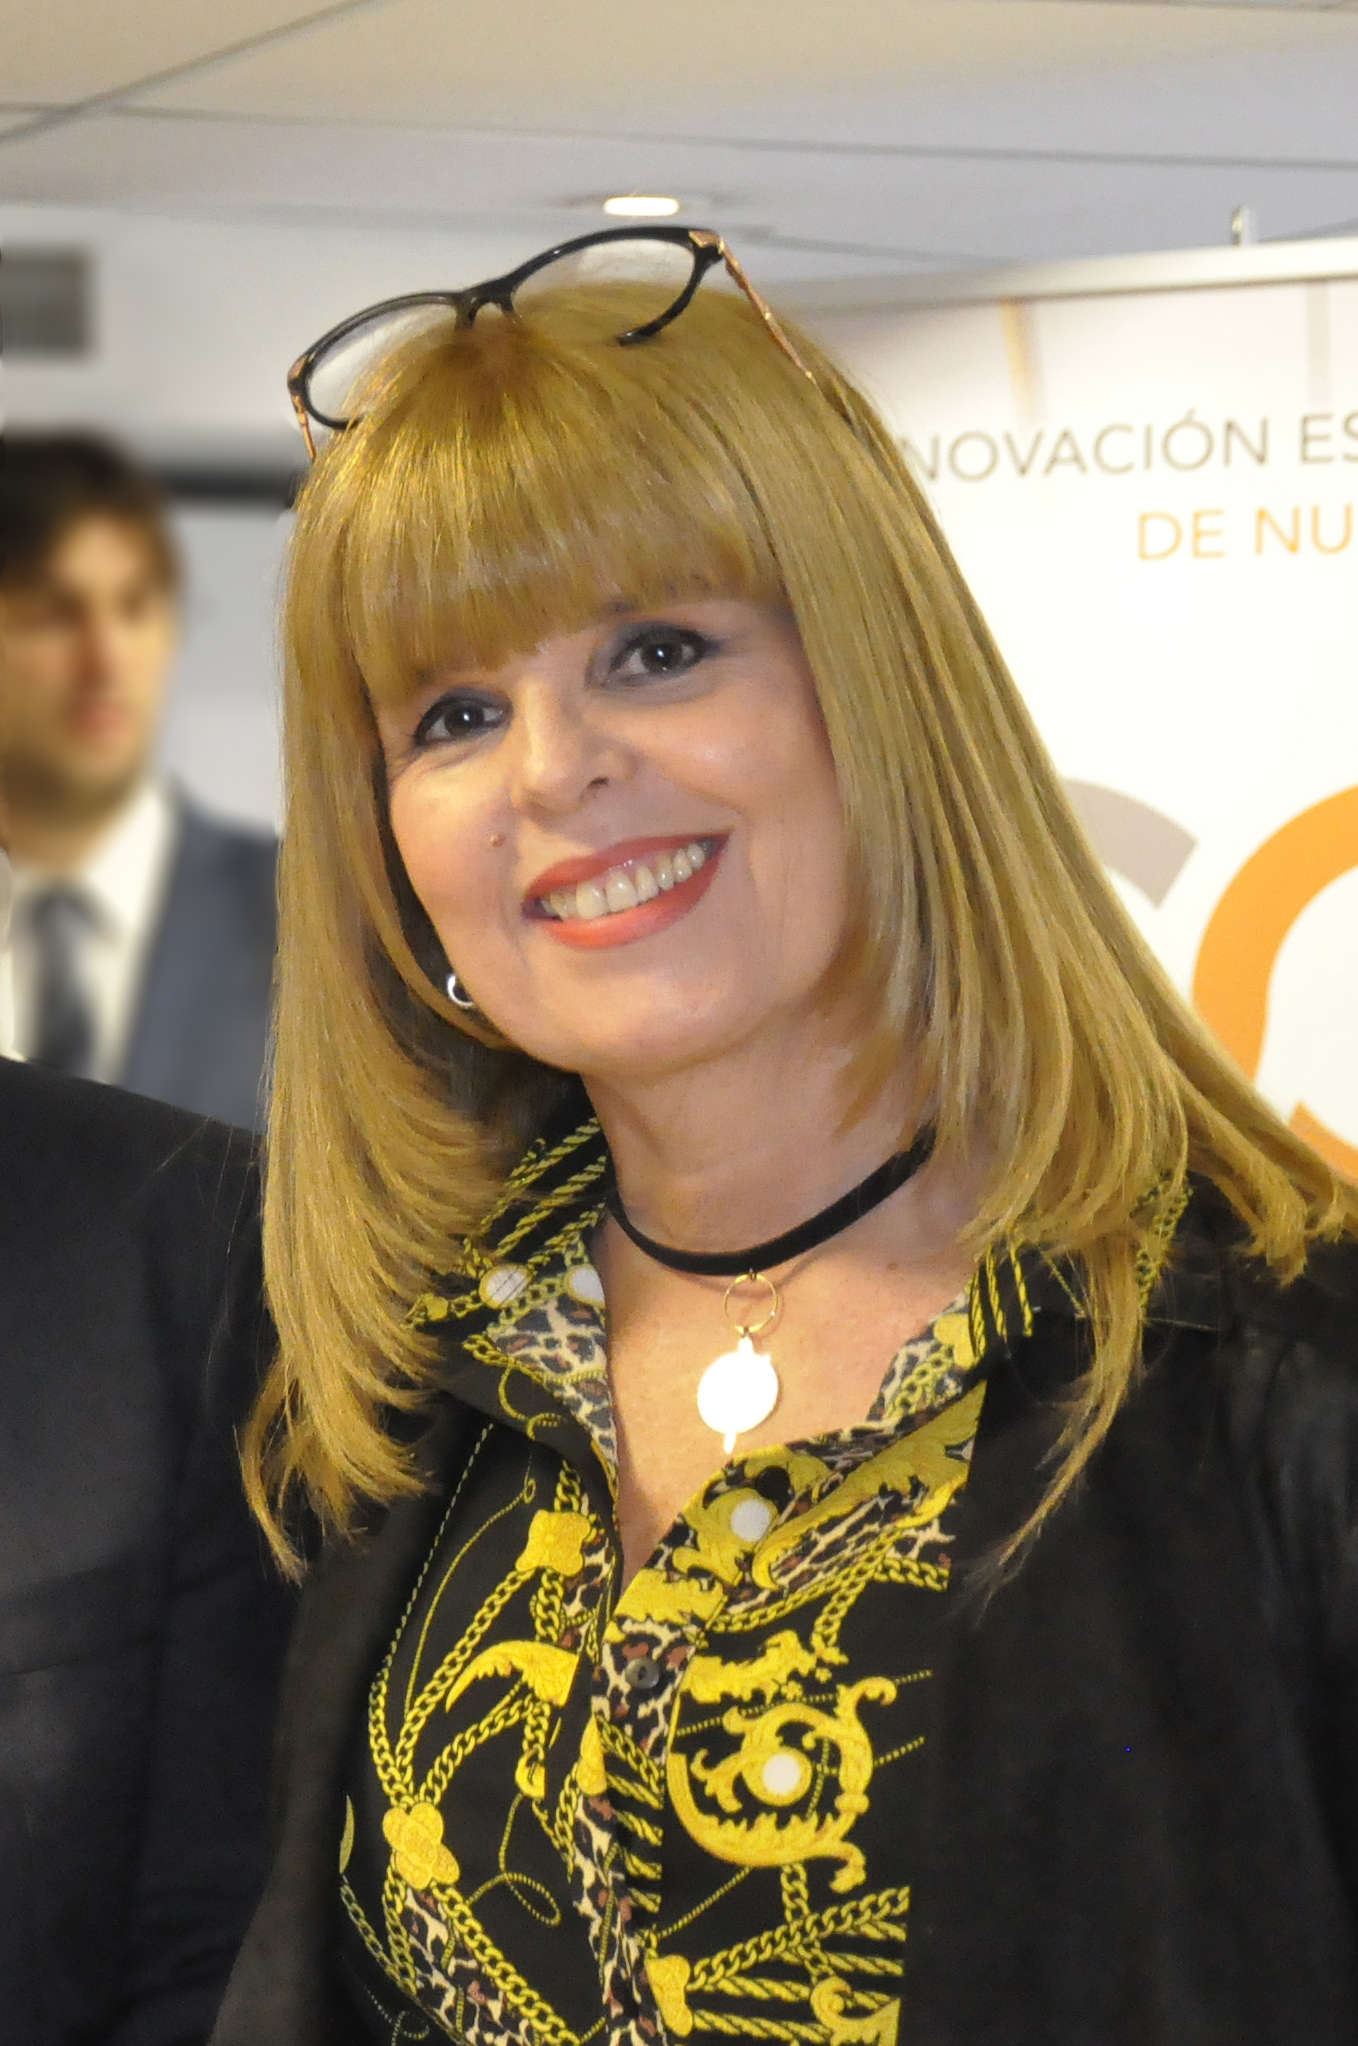 Margarita Menendez Llano